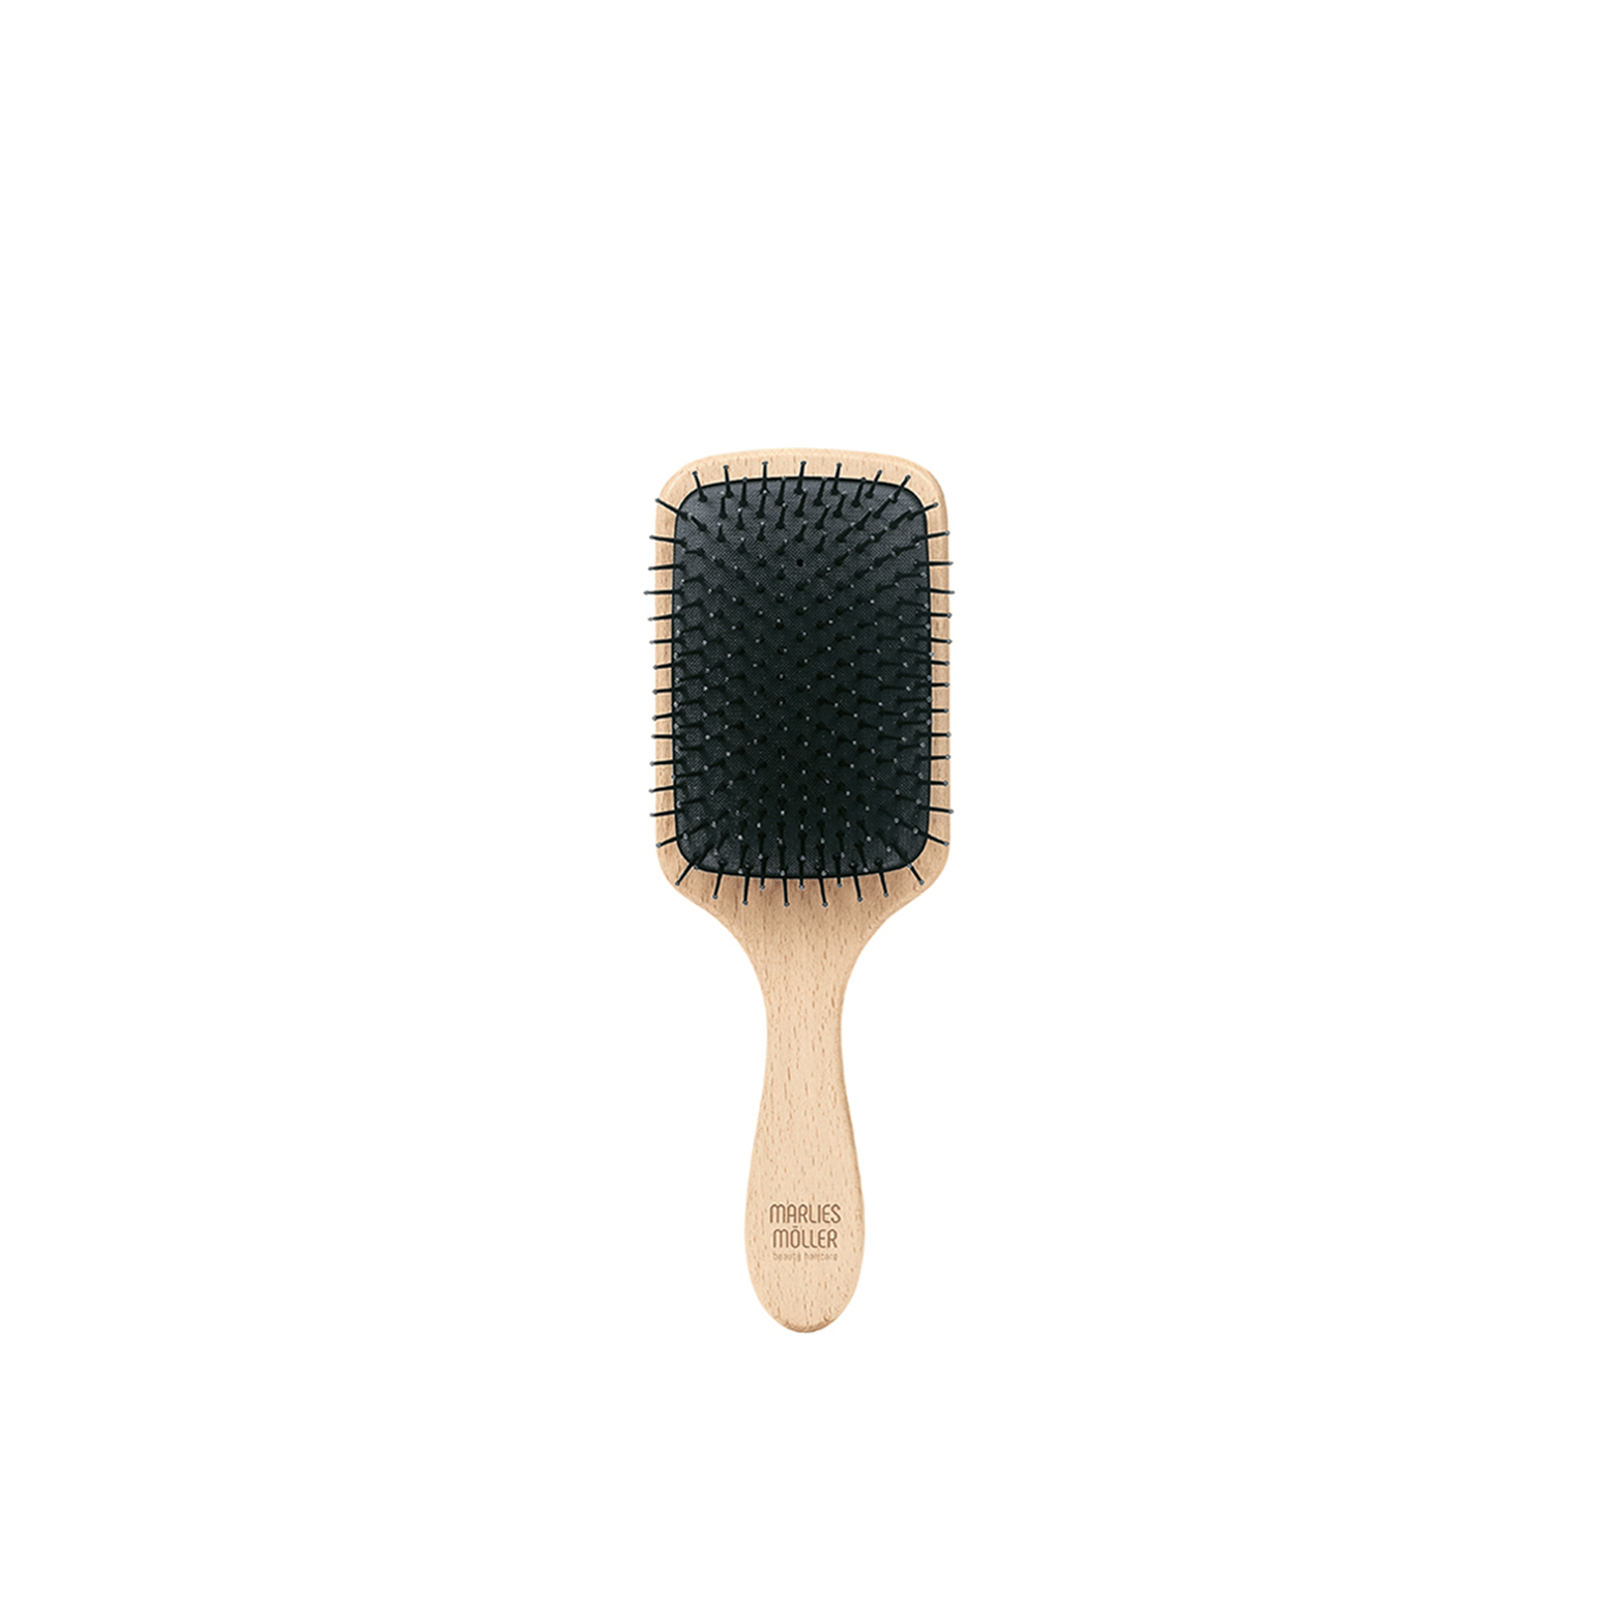 Marlies Möller Professional Brush Travel Hair & Scalp Brush